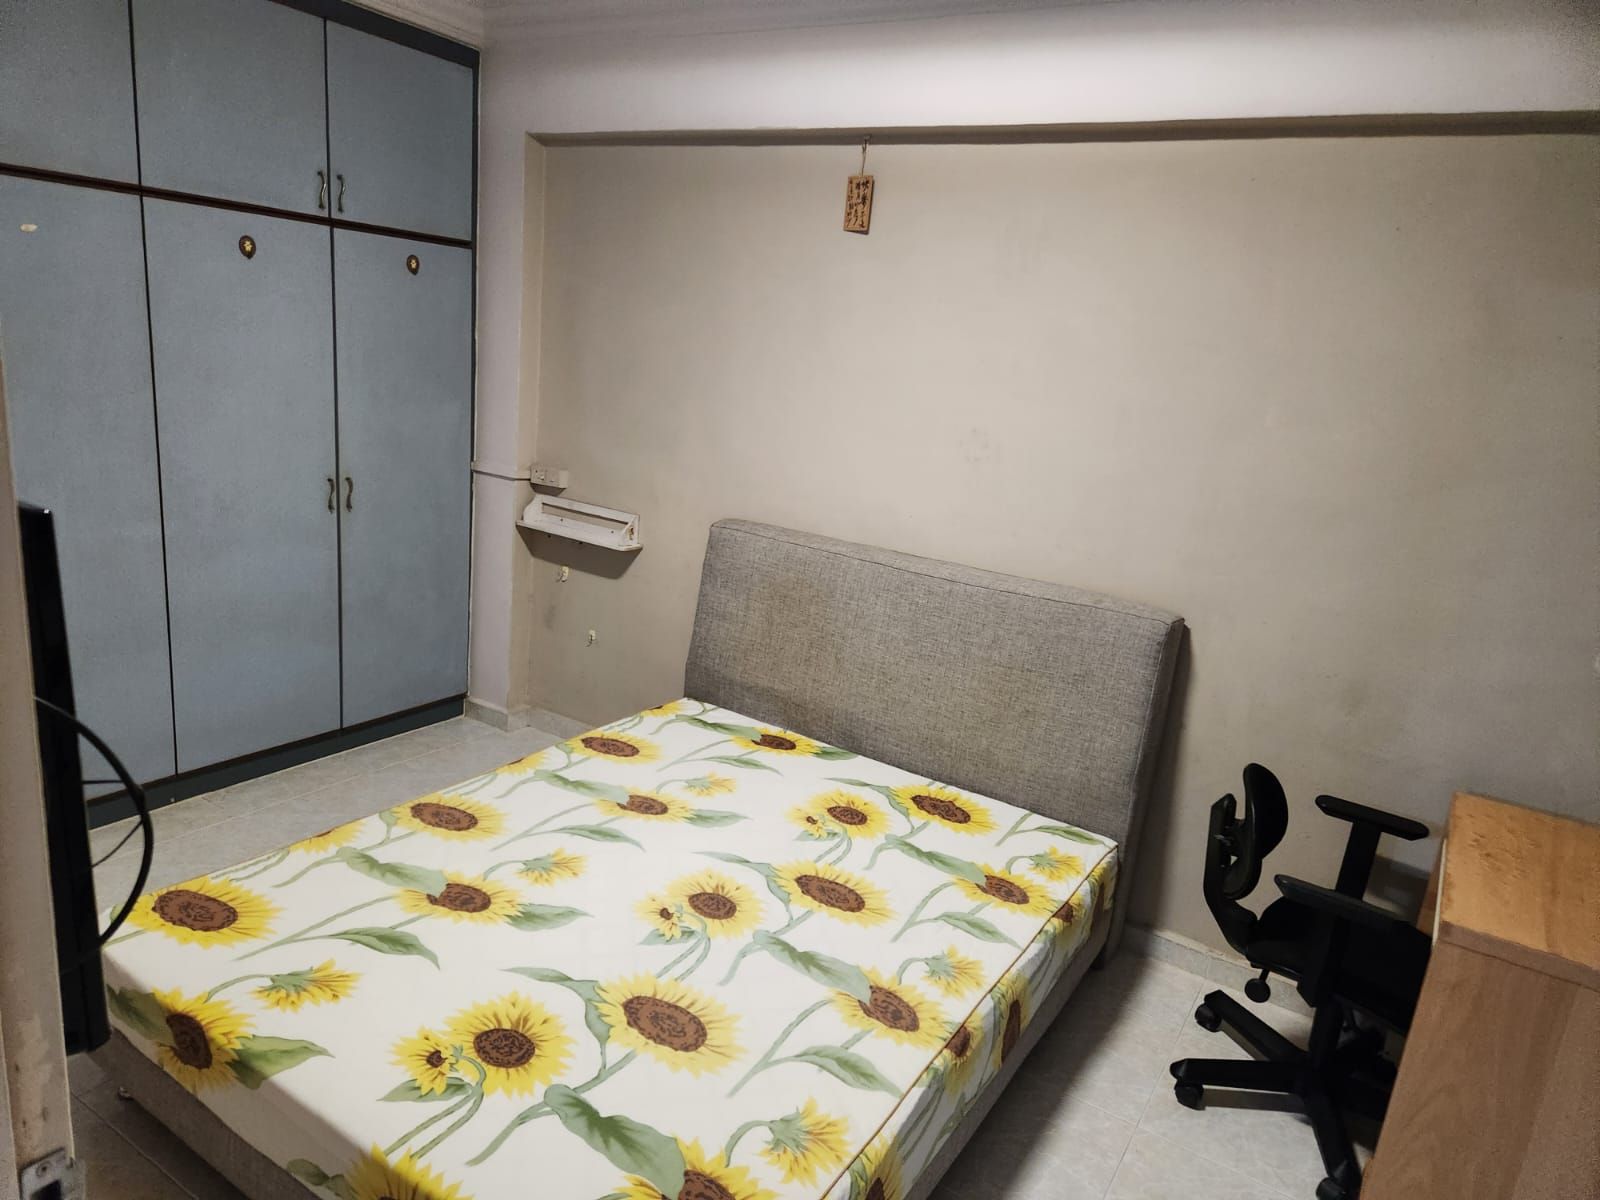 HDB - 4 room For Rent, Jurong East, Jurong East, 1,200 SGD, 99-year, Floor